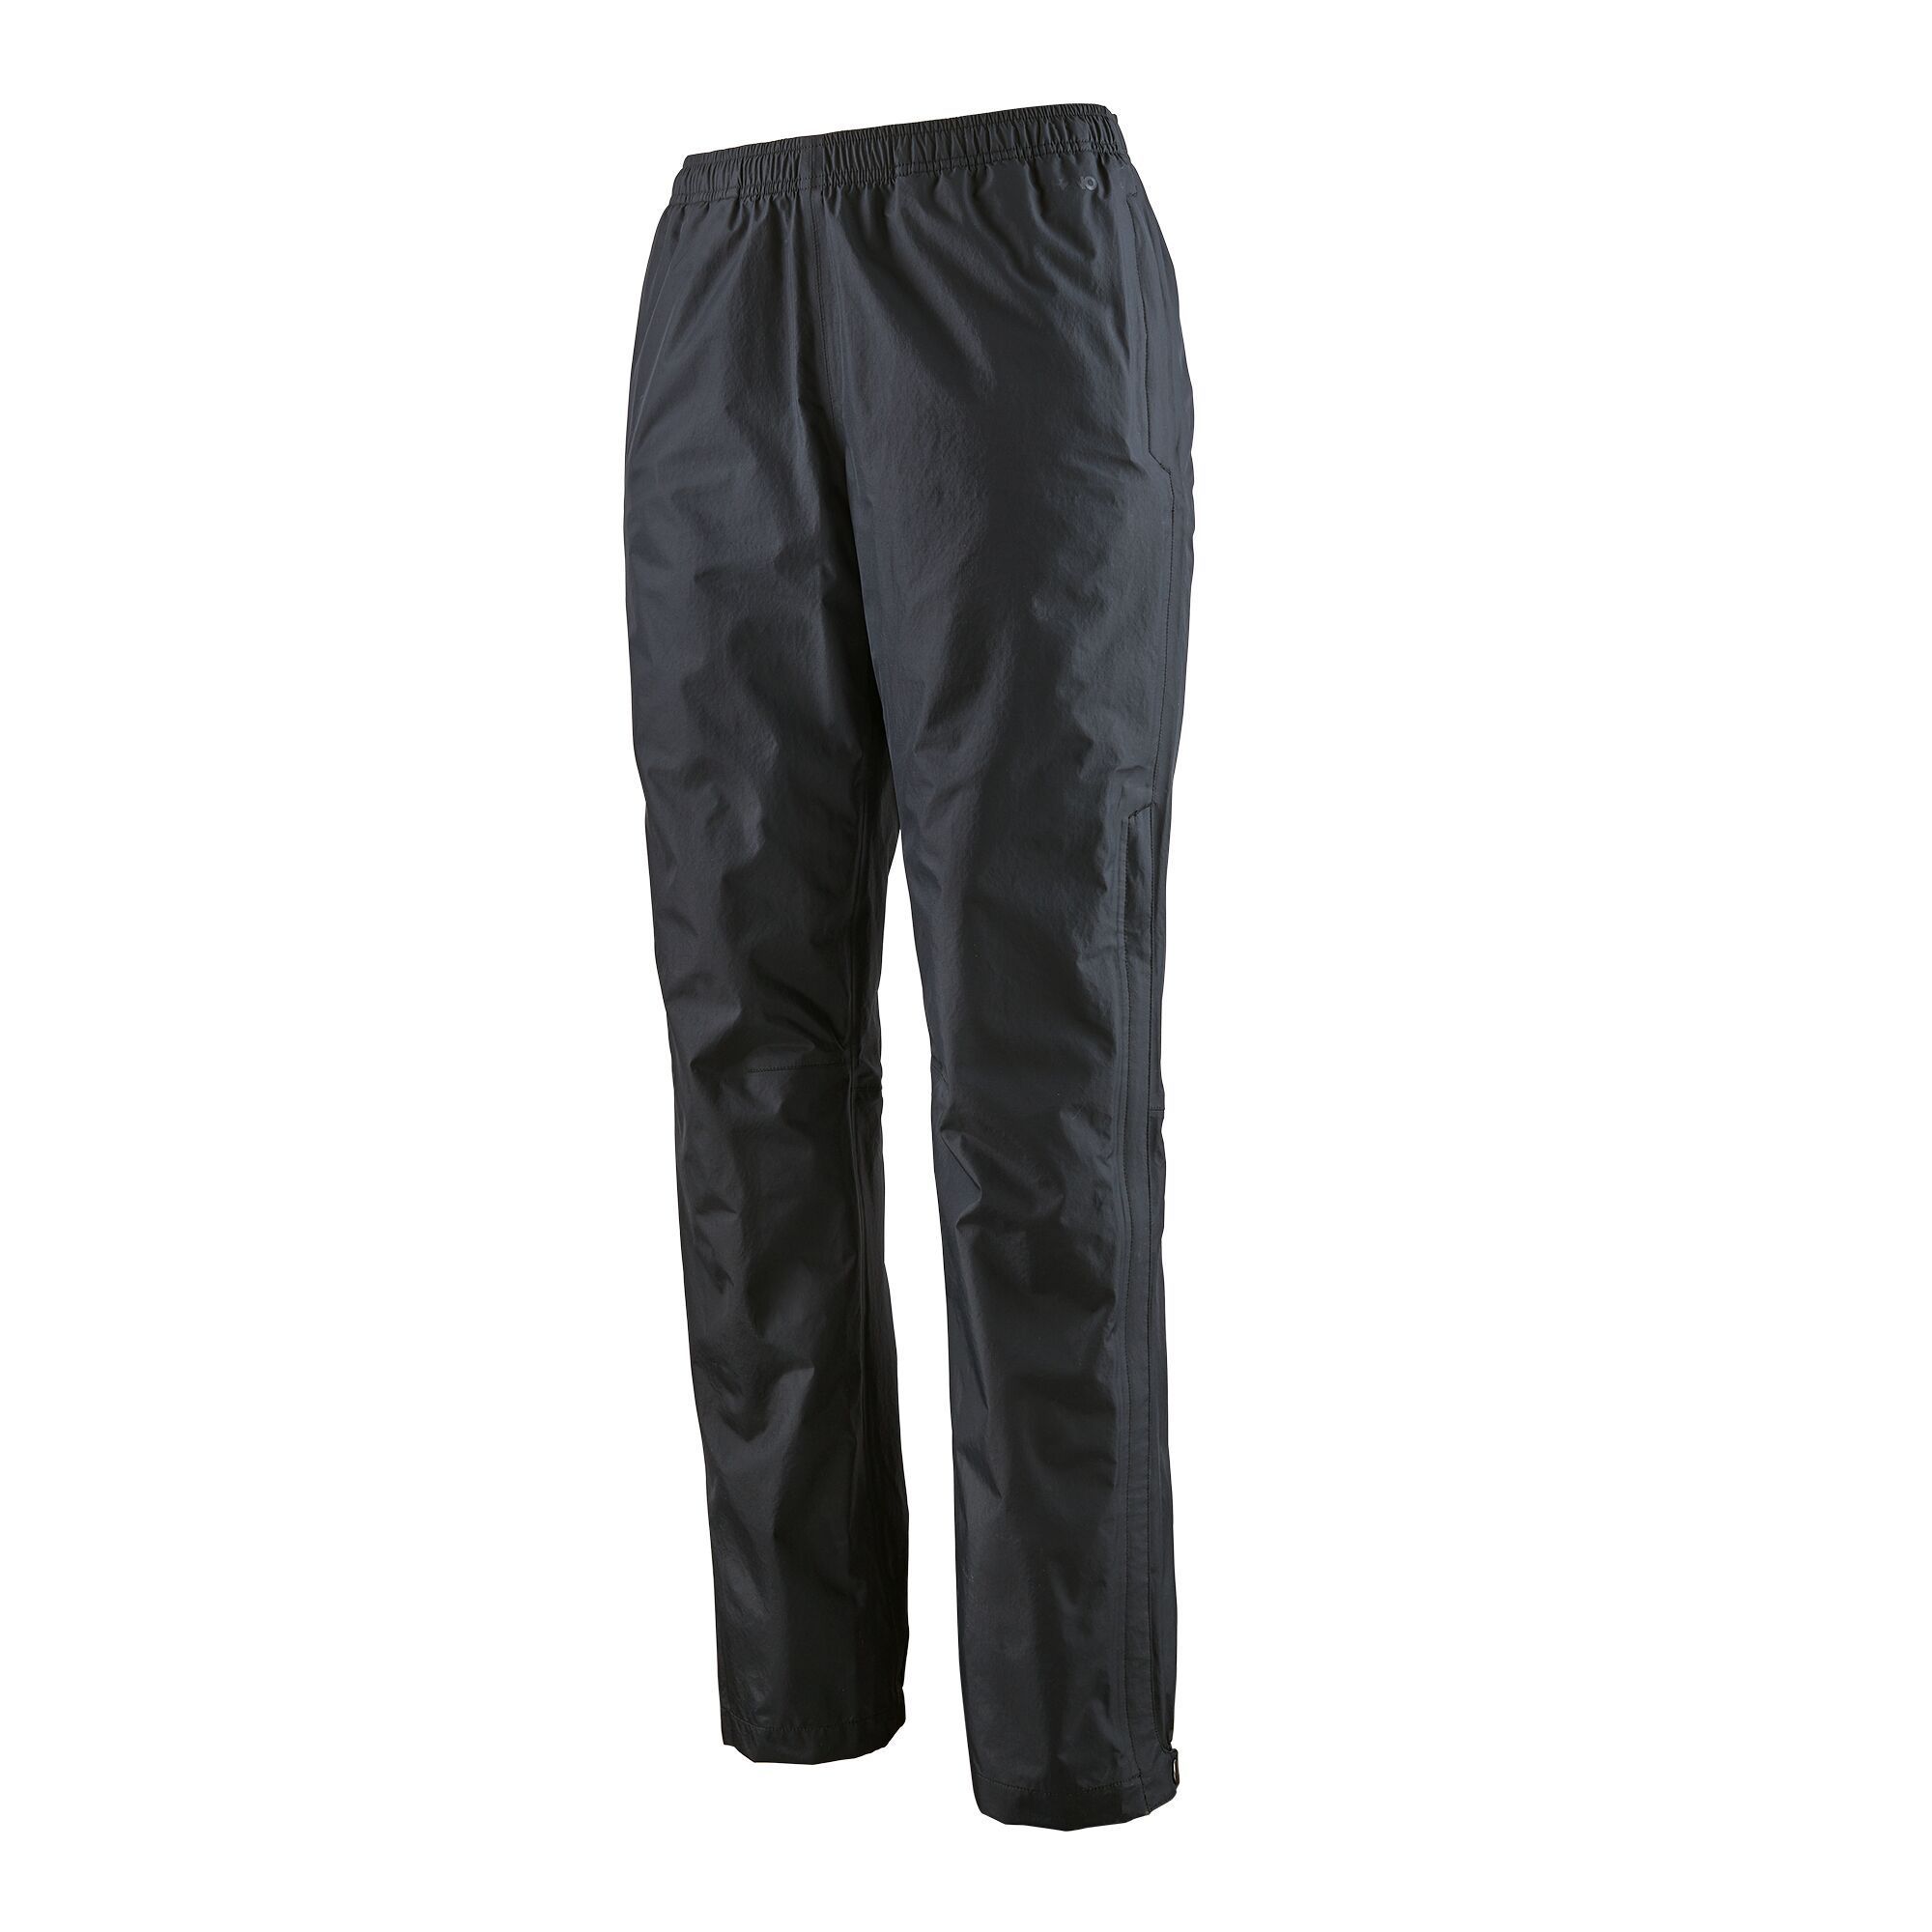 Patagonia Women's Torrentshell 3L Pants - 100% Recycled Nylon, Black / XS-regular